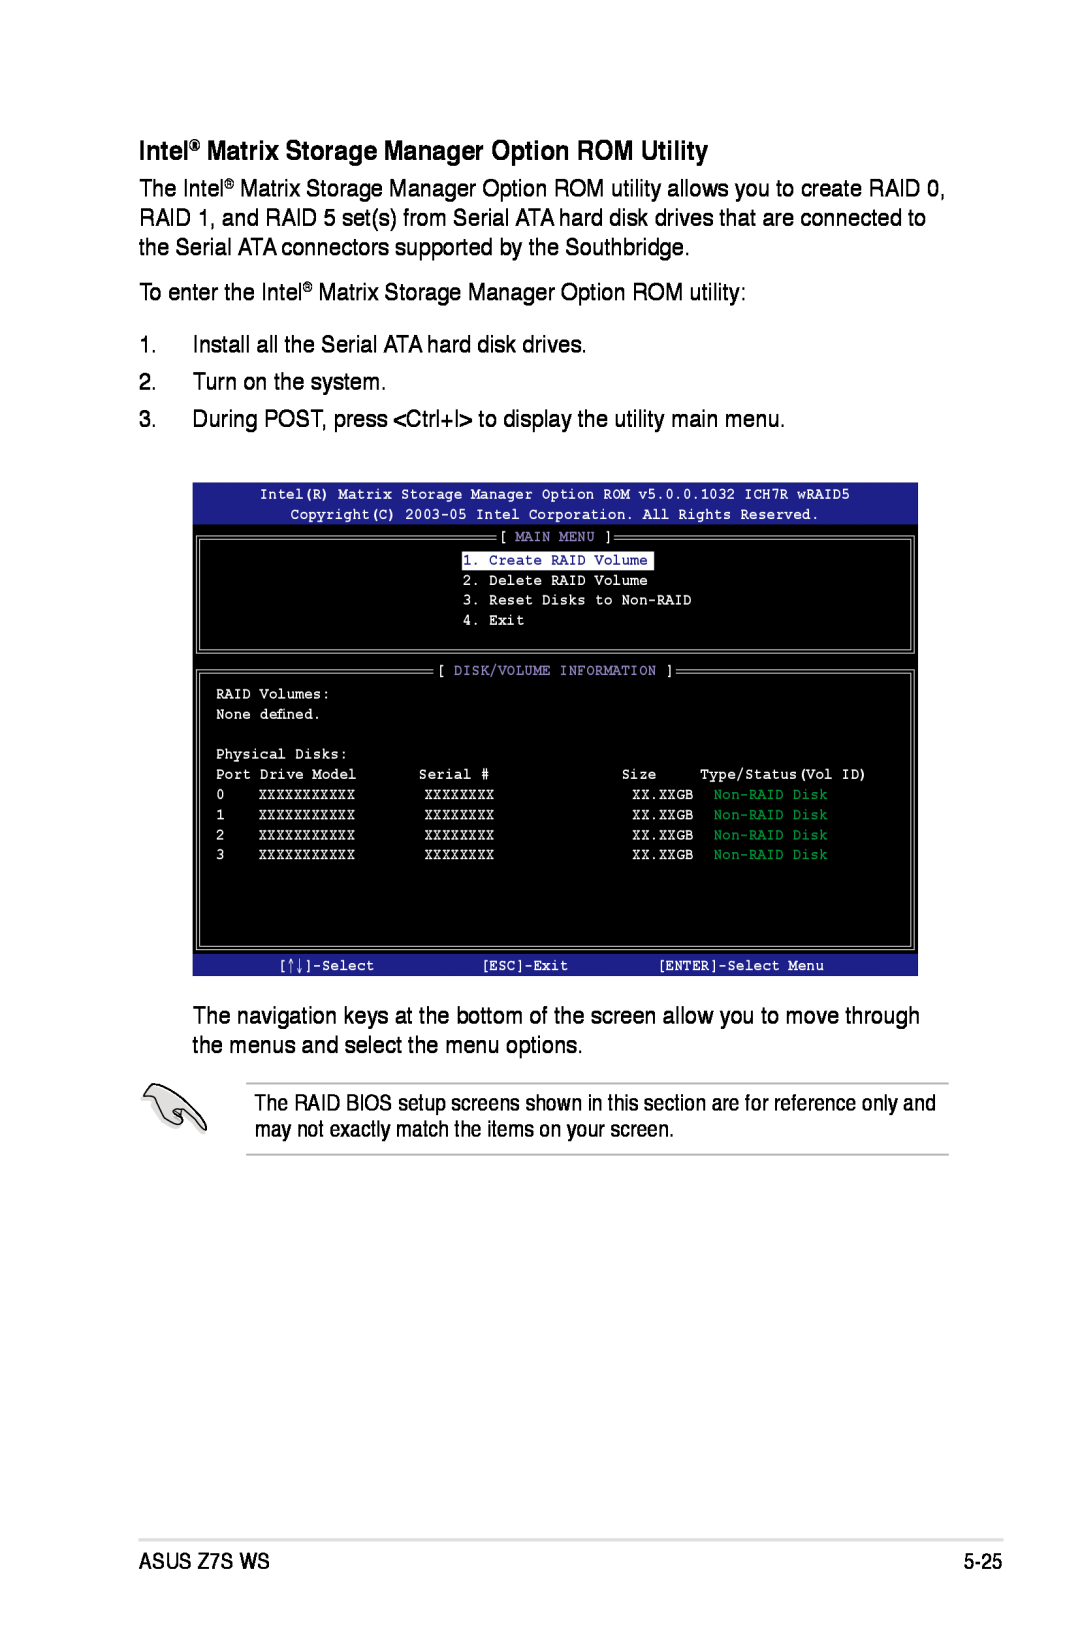 Asus Z7S WS manual Intel Matrix Storage Manager Option ROM Utility, Non-RAID Disk 